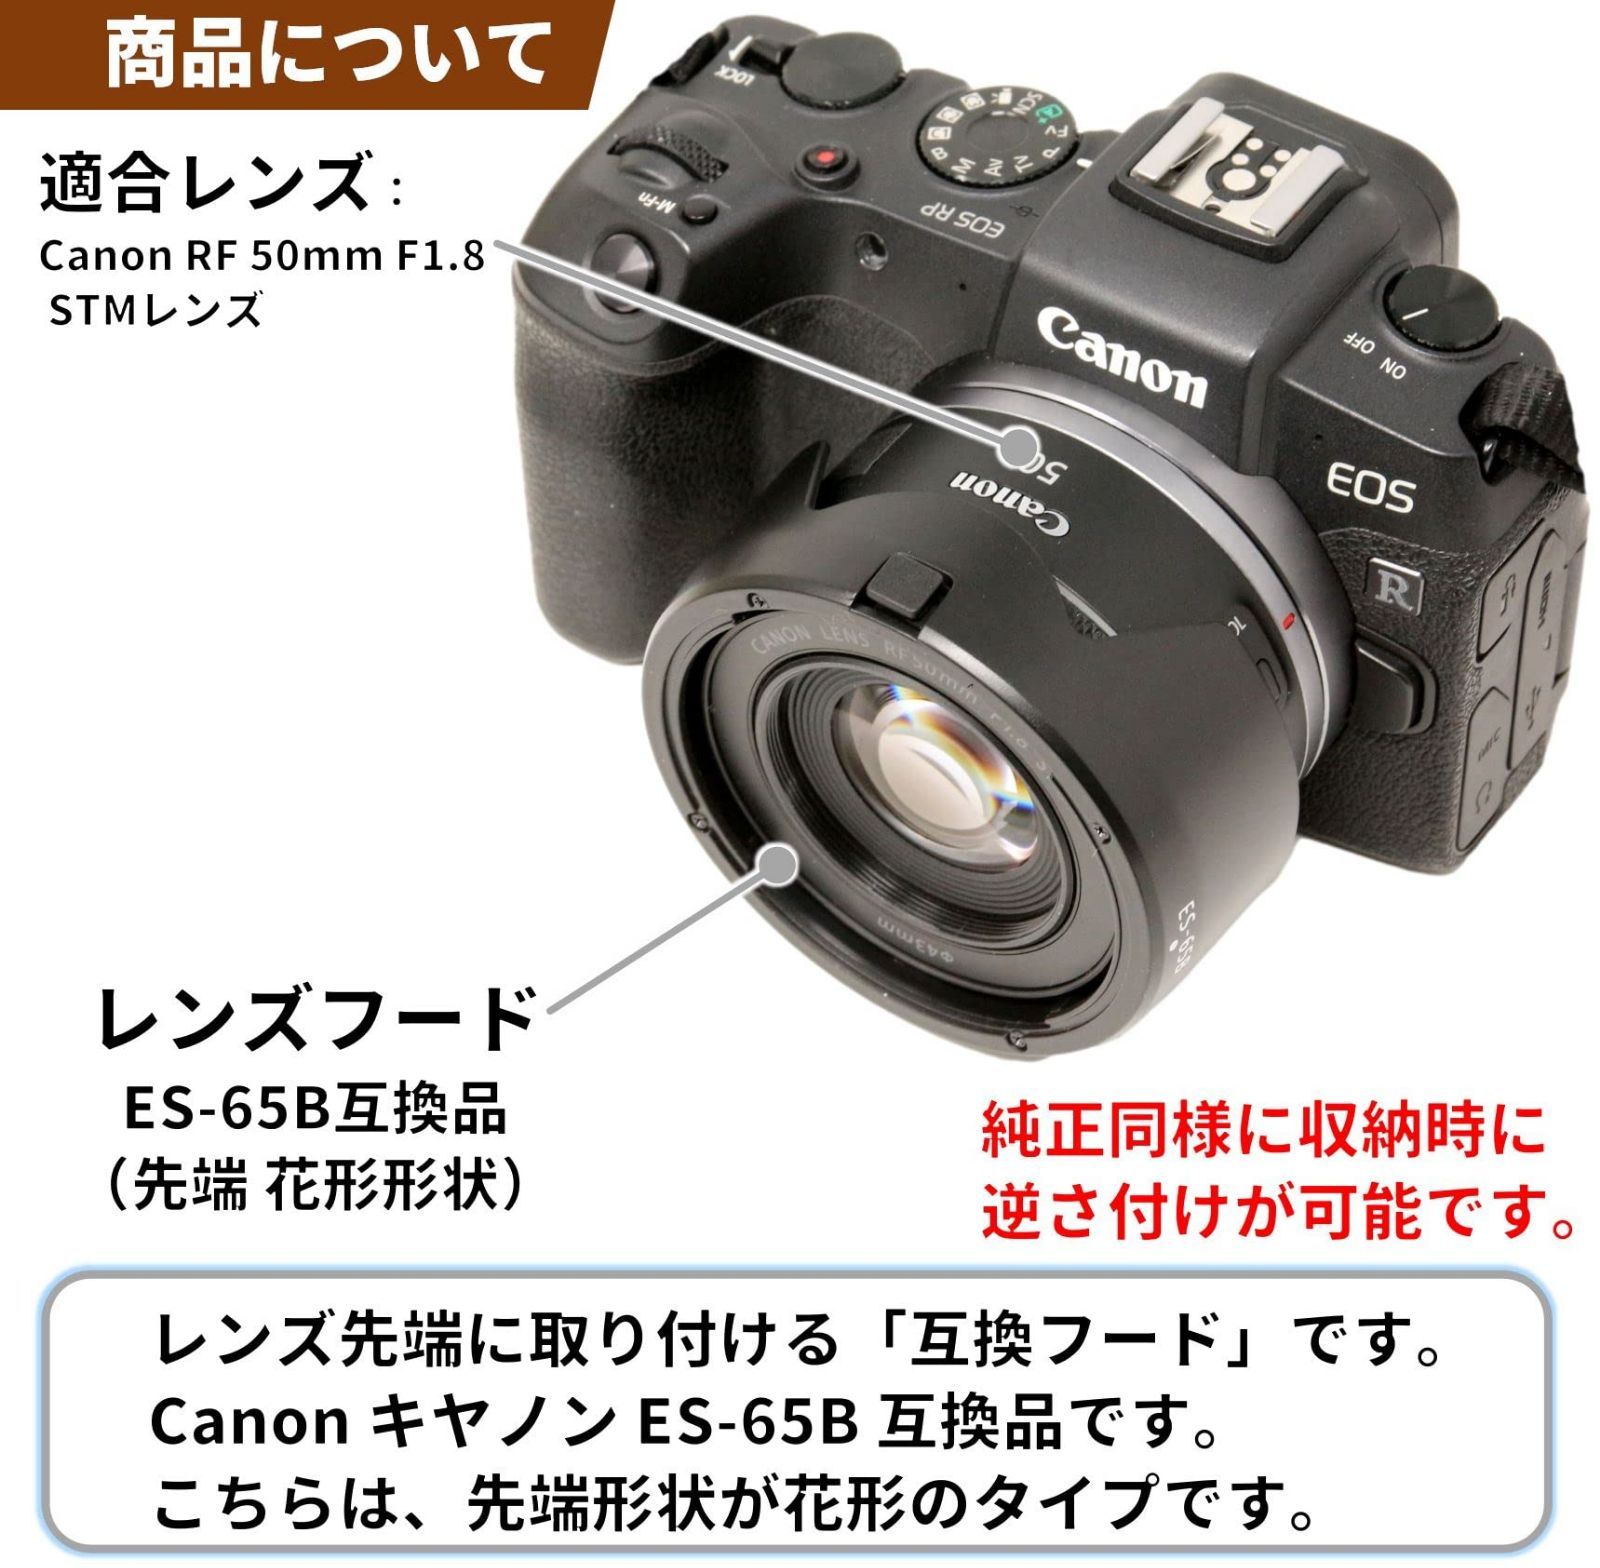 F-Foto ES-65B 互換フード (対象レンズ: Canon RF 50mm F1.8 STM